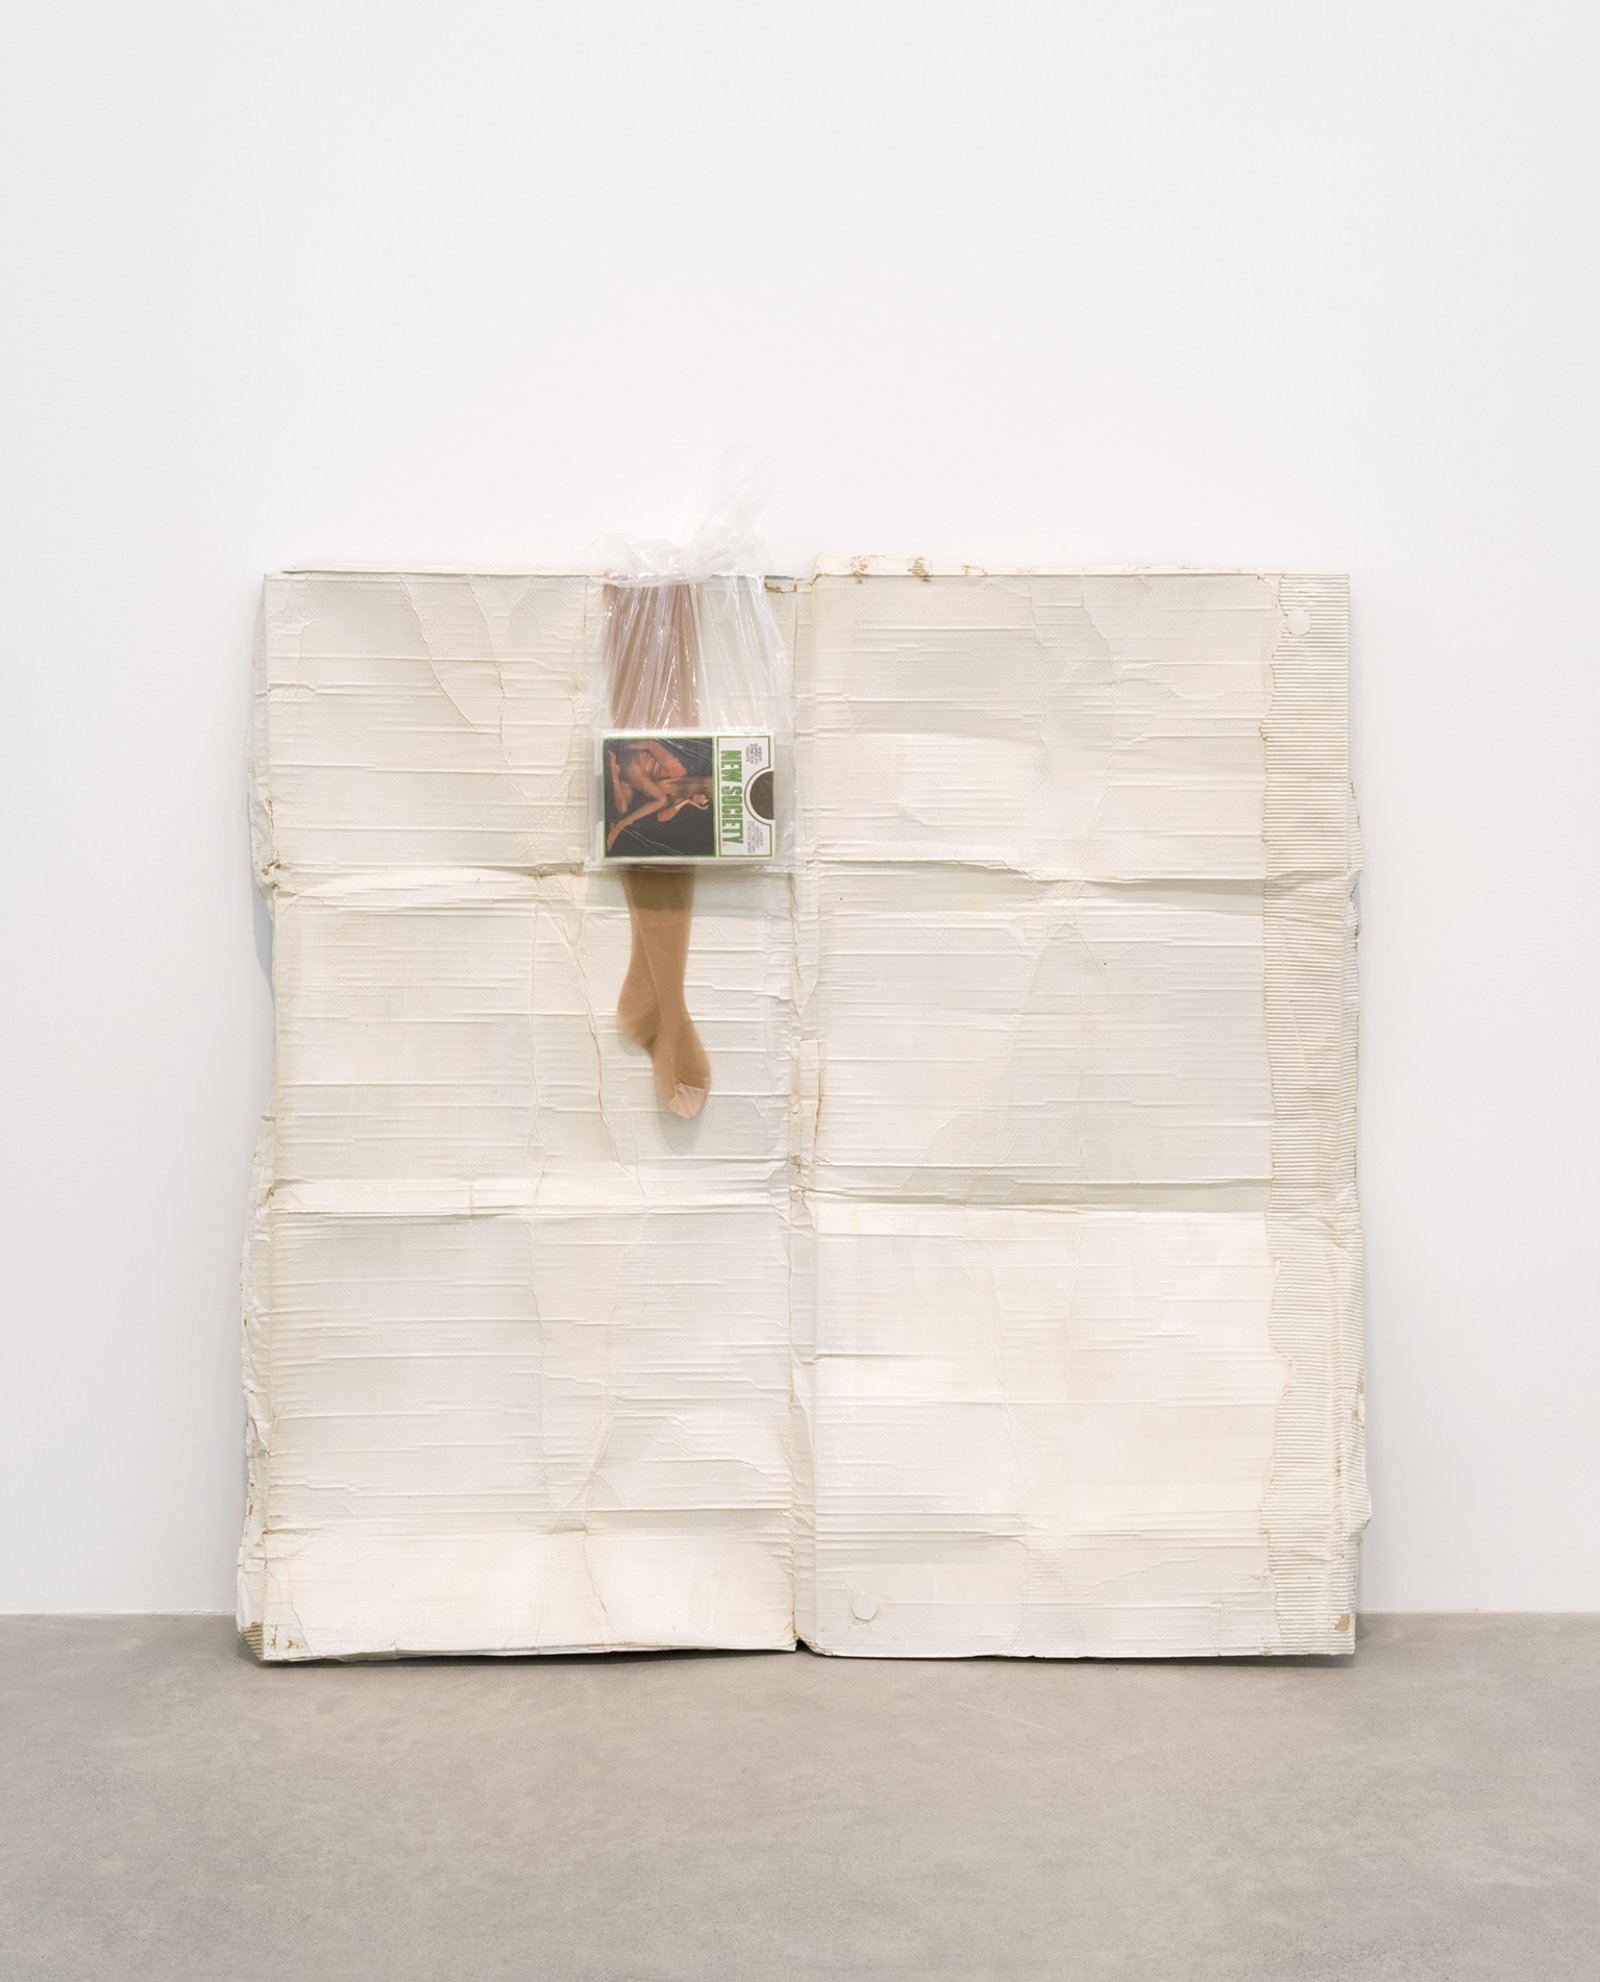 Liz Magor, New Society, 2016, polymerized gypsum, plastic bag, nylon stockings, 66 x 61 x 12 in. (168 x 155 x 30 cm) by Liz Magor